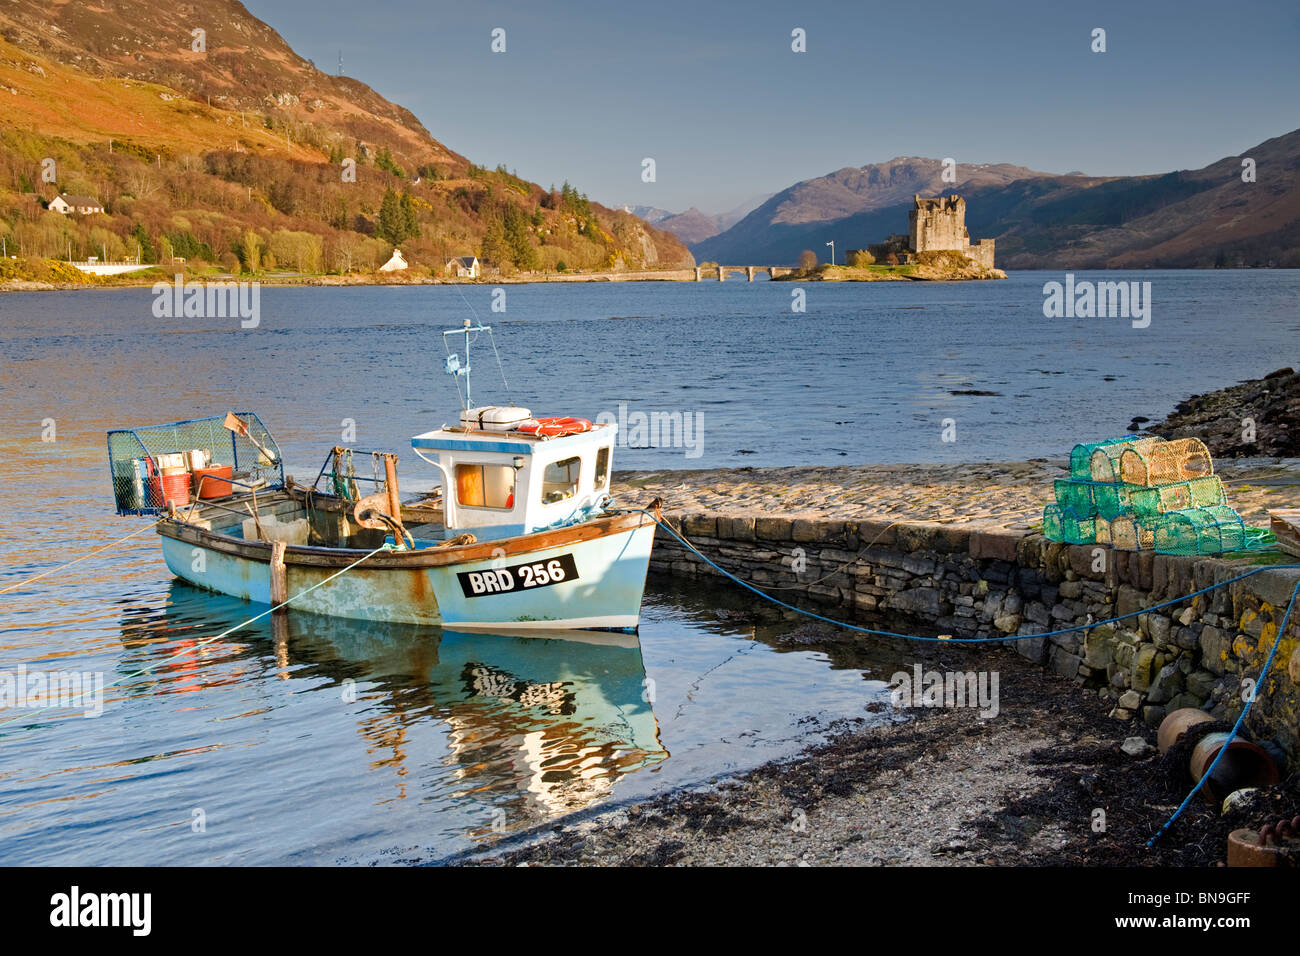 Local Fishing Boat & Eilean Donan Castle, Loch Duich, Scottish Highlands, Scotland, UK Stock Photo